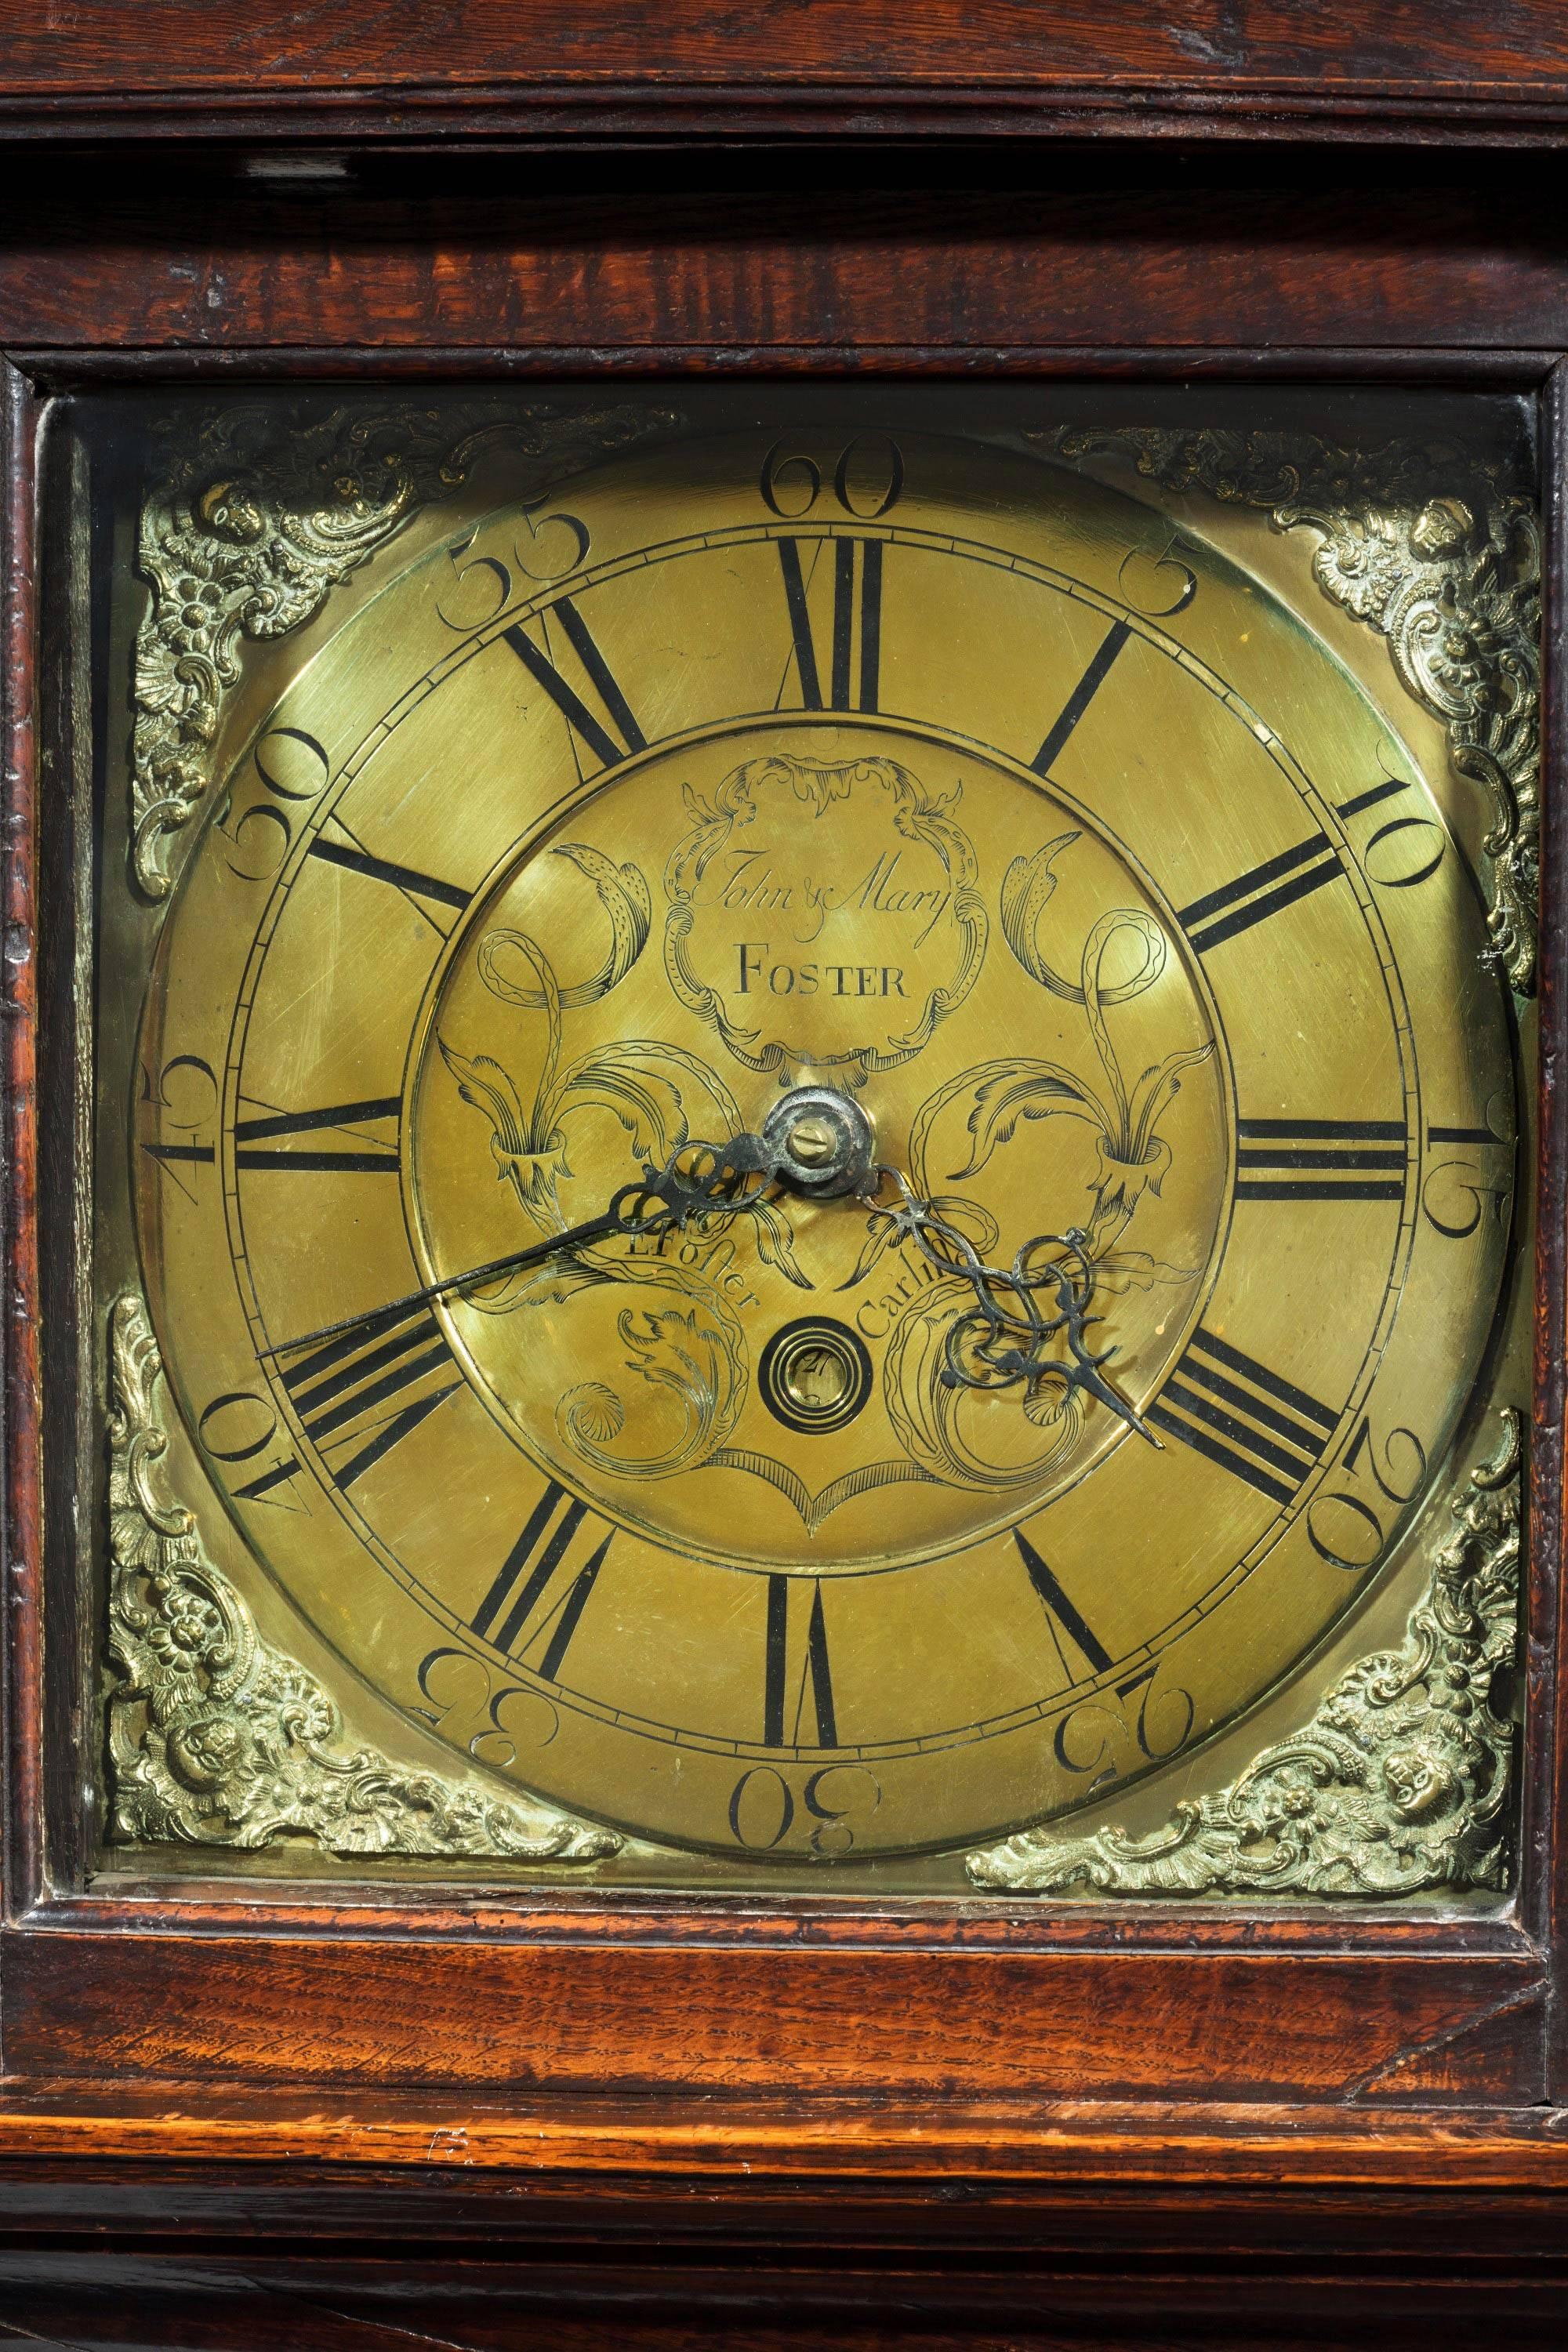 1700s grandfather clock